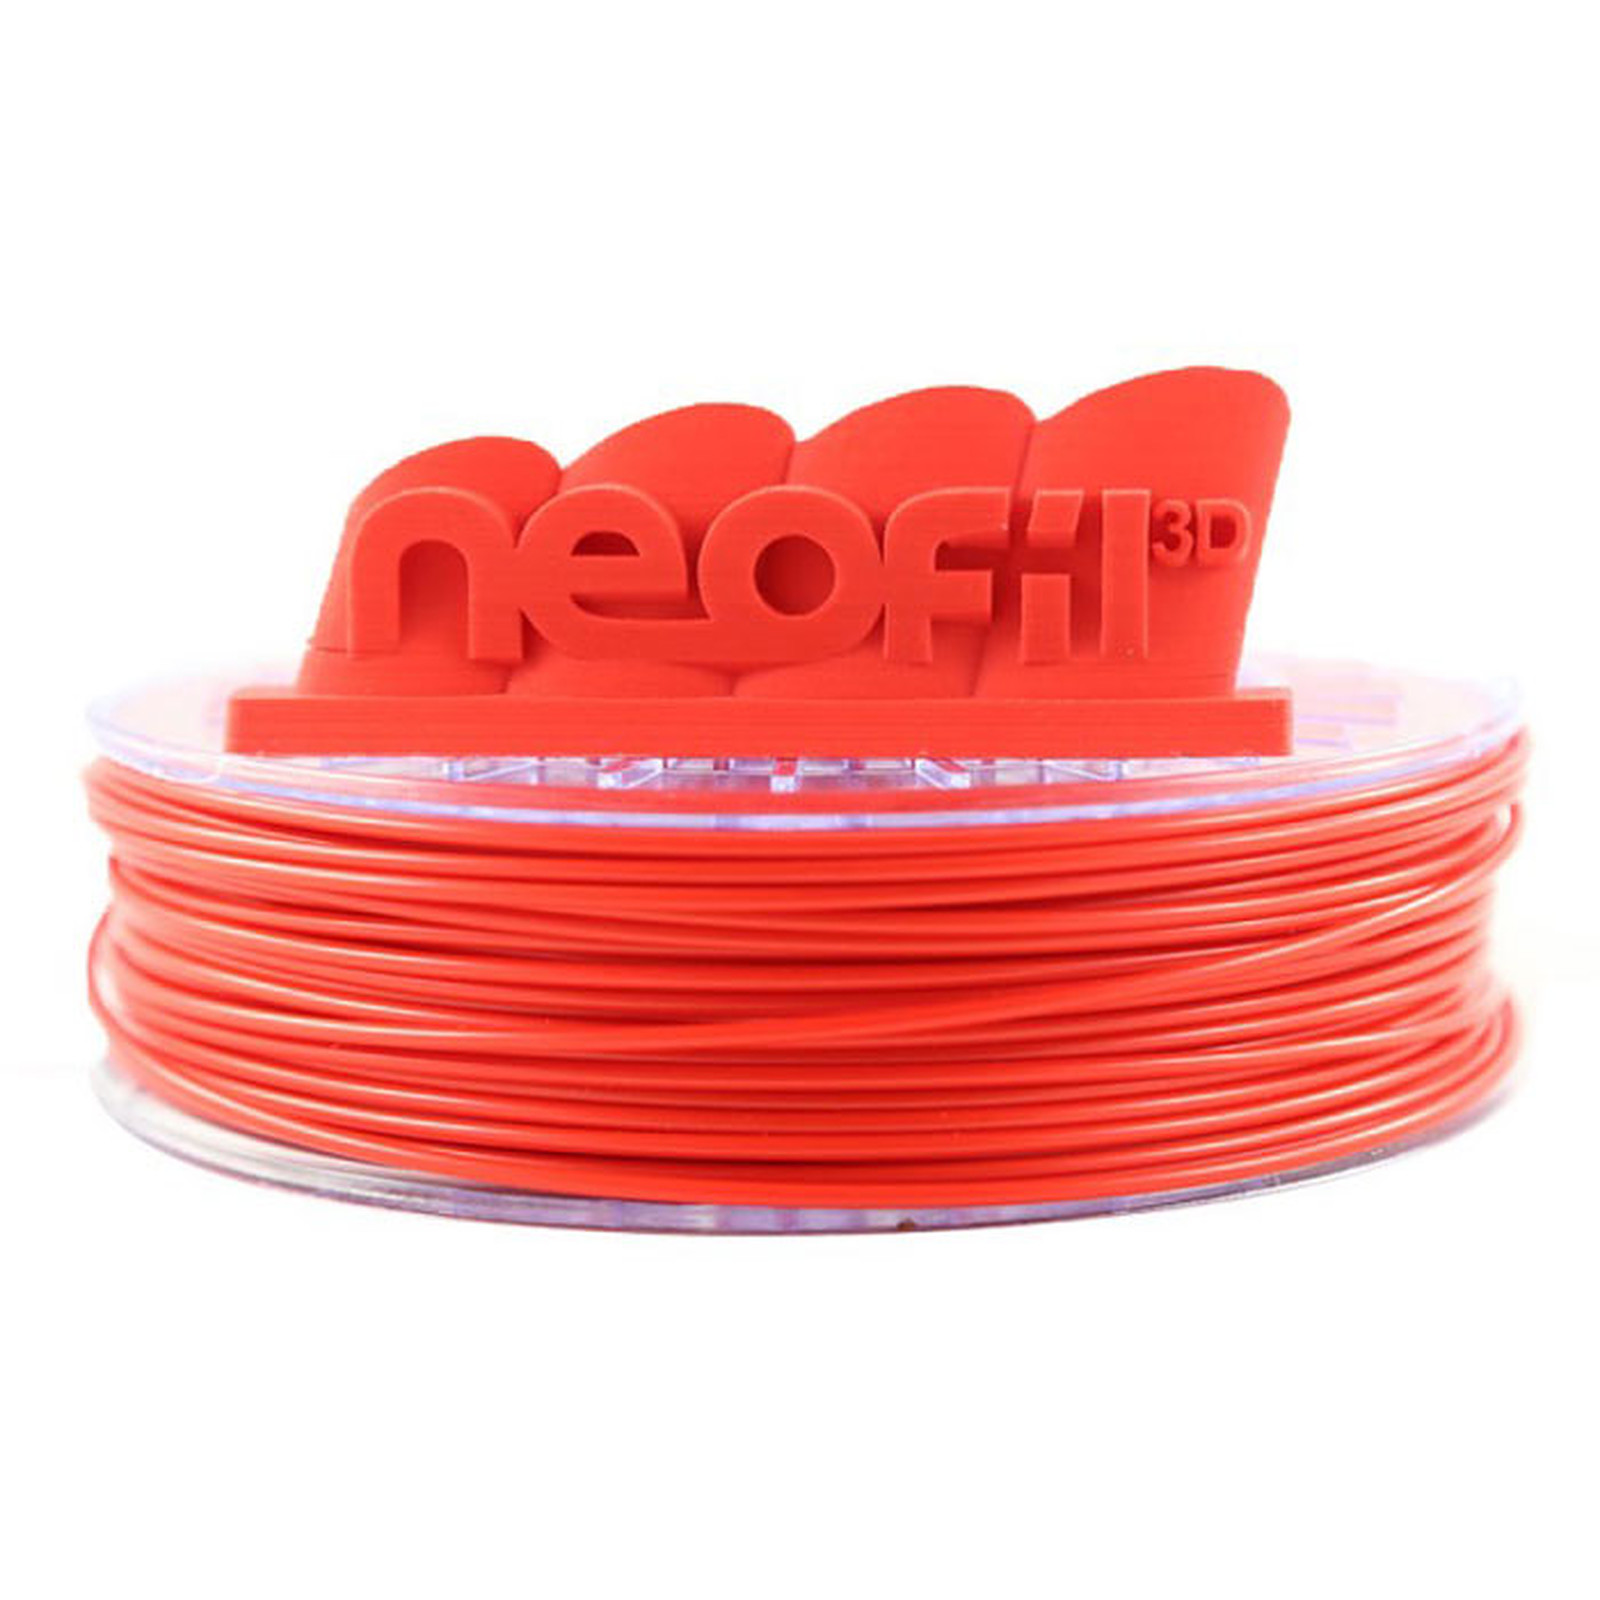 Neofil3D Bobine M-ABS 1.75mm 750g - Rouge - Filament 3D Neofil3D